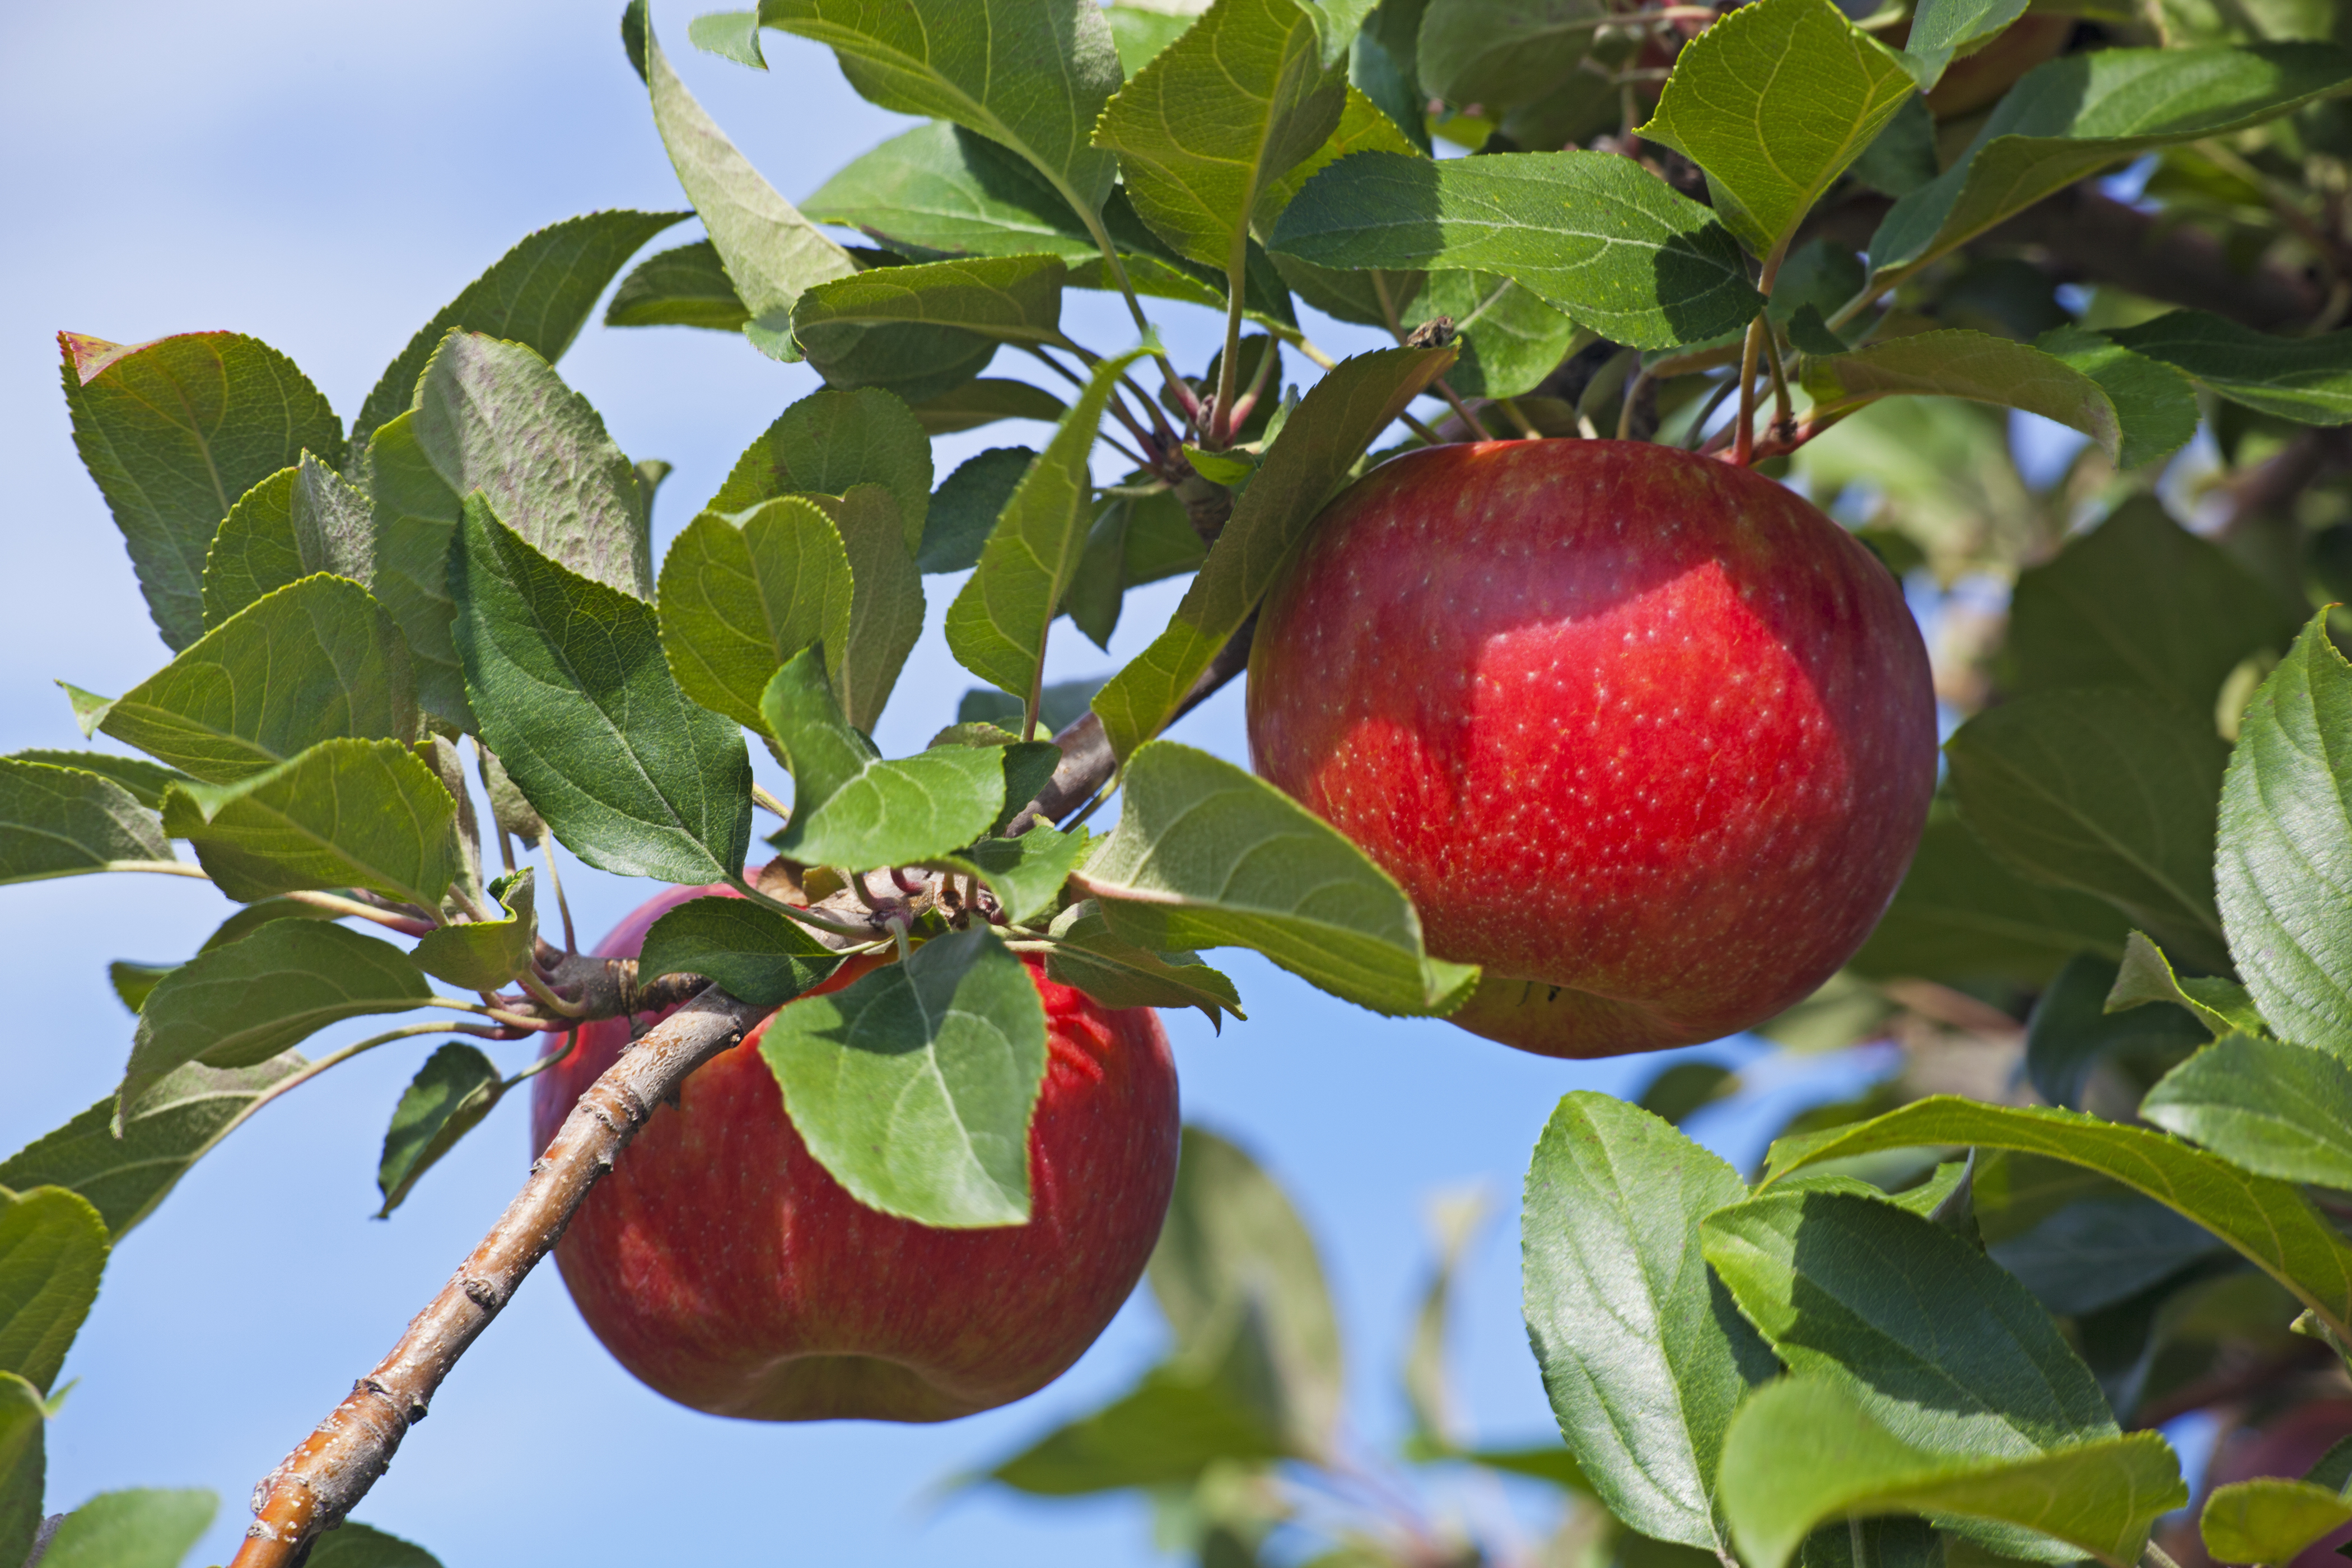 Honeycrisp Apple Trees for Sale